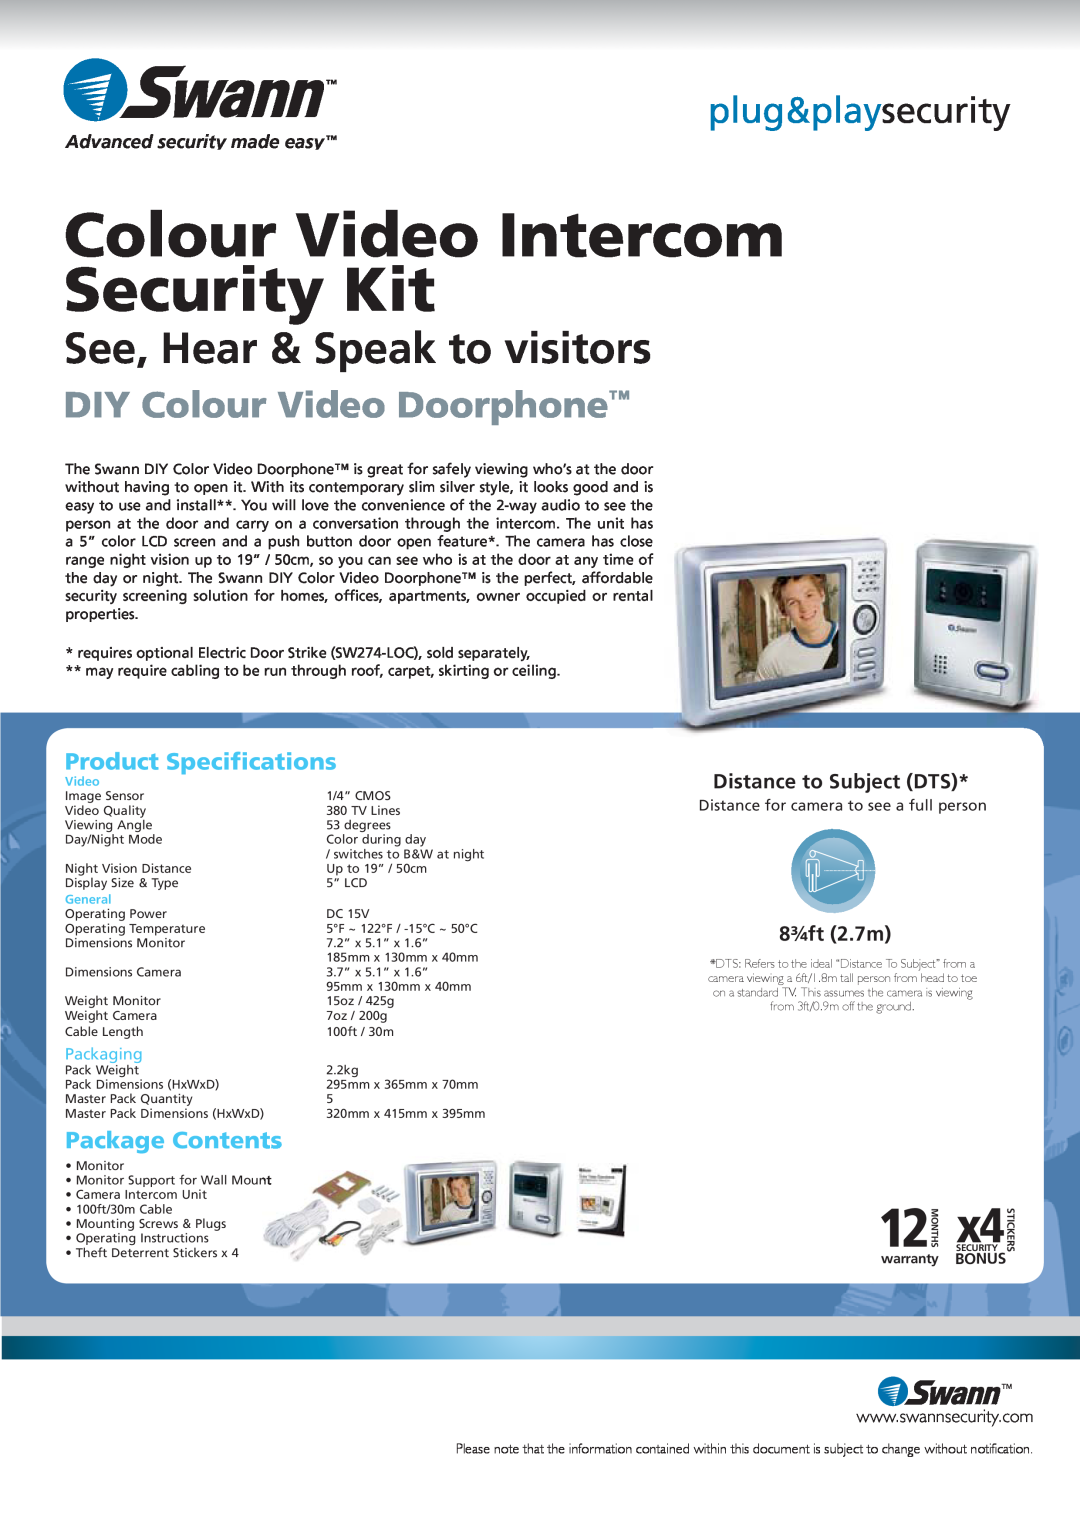 Swann SW244-CVD DIY Colour Video Doorphone, Colour Video Intercom Security Kit, See, Hear & Speak to visitors, 8¾ft 2.7m 